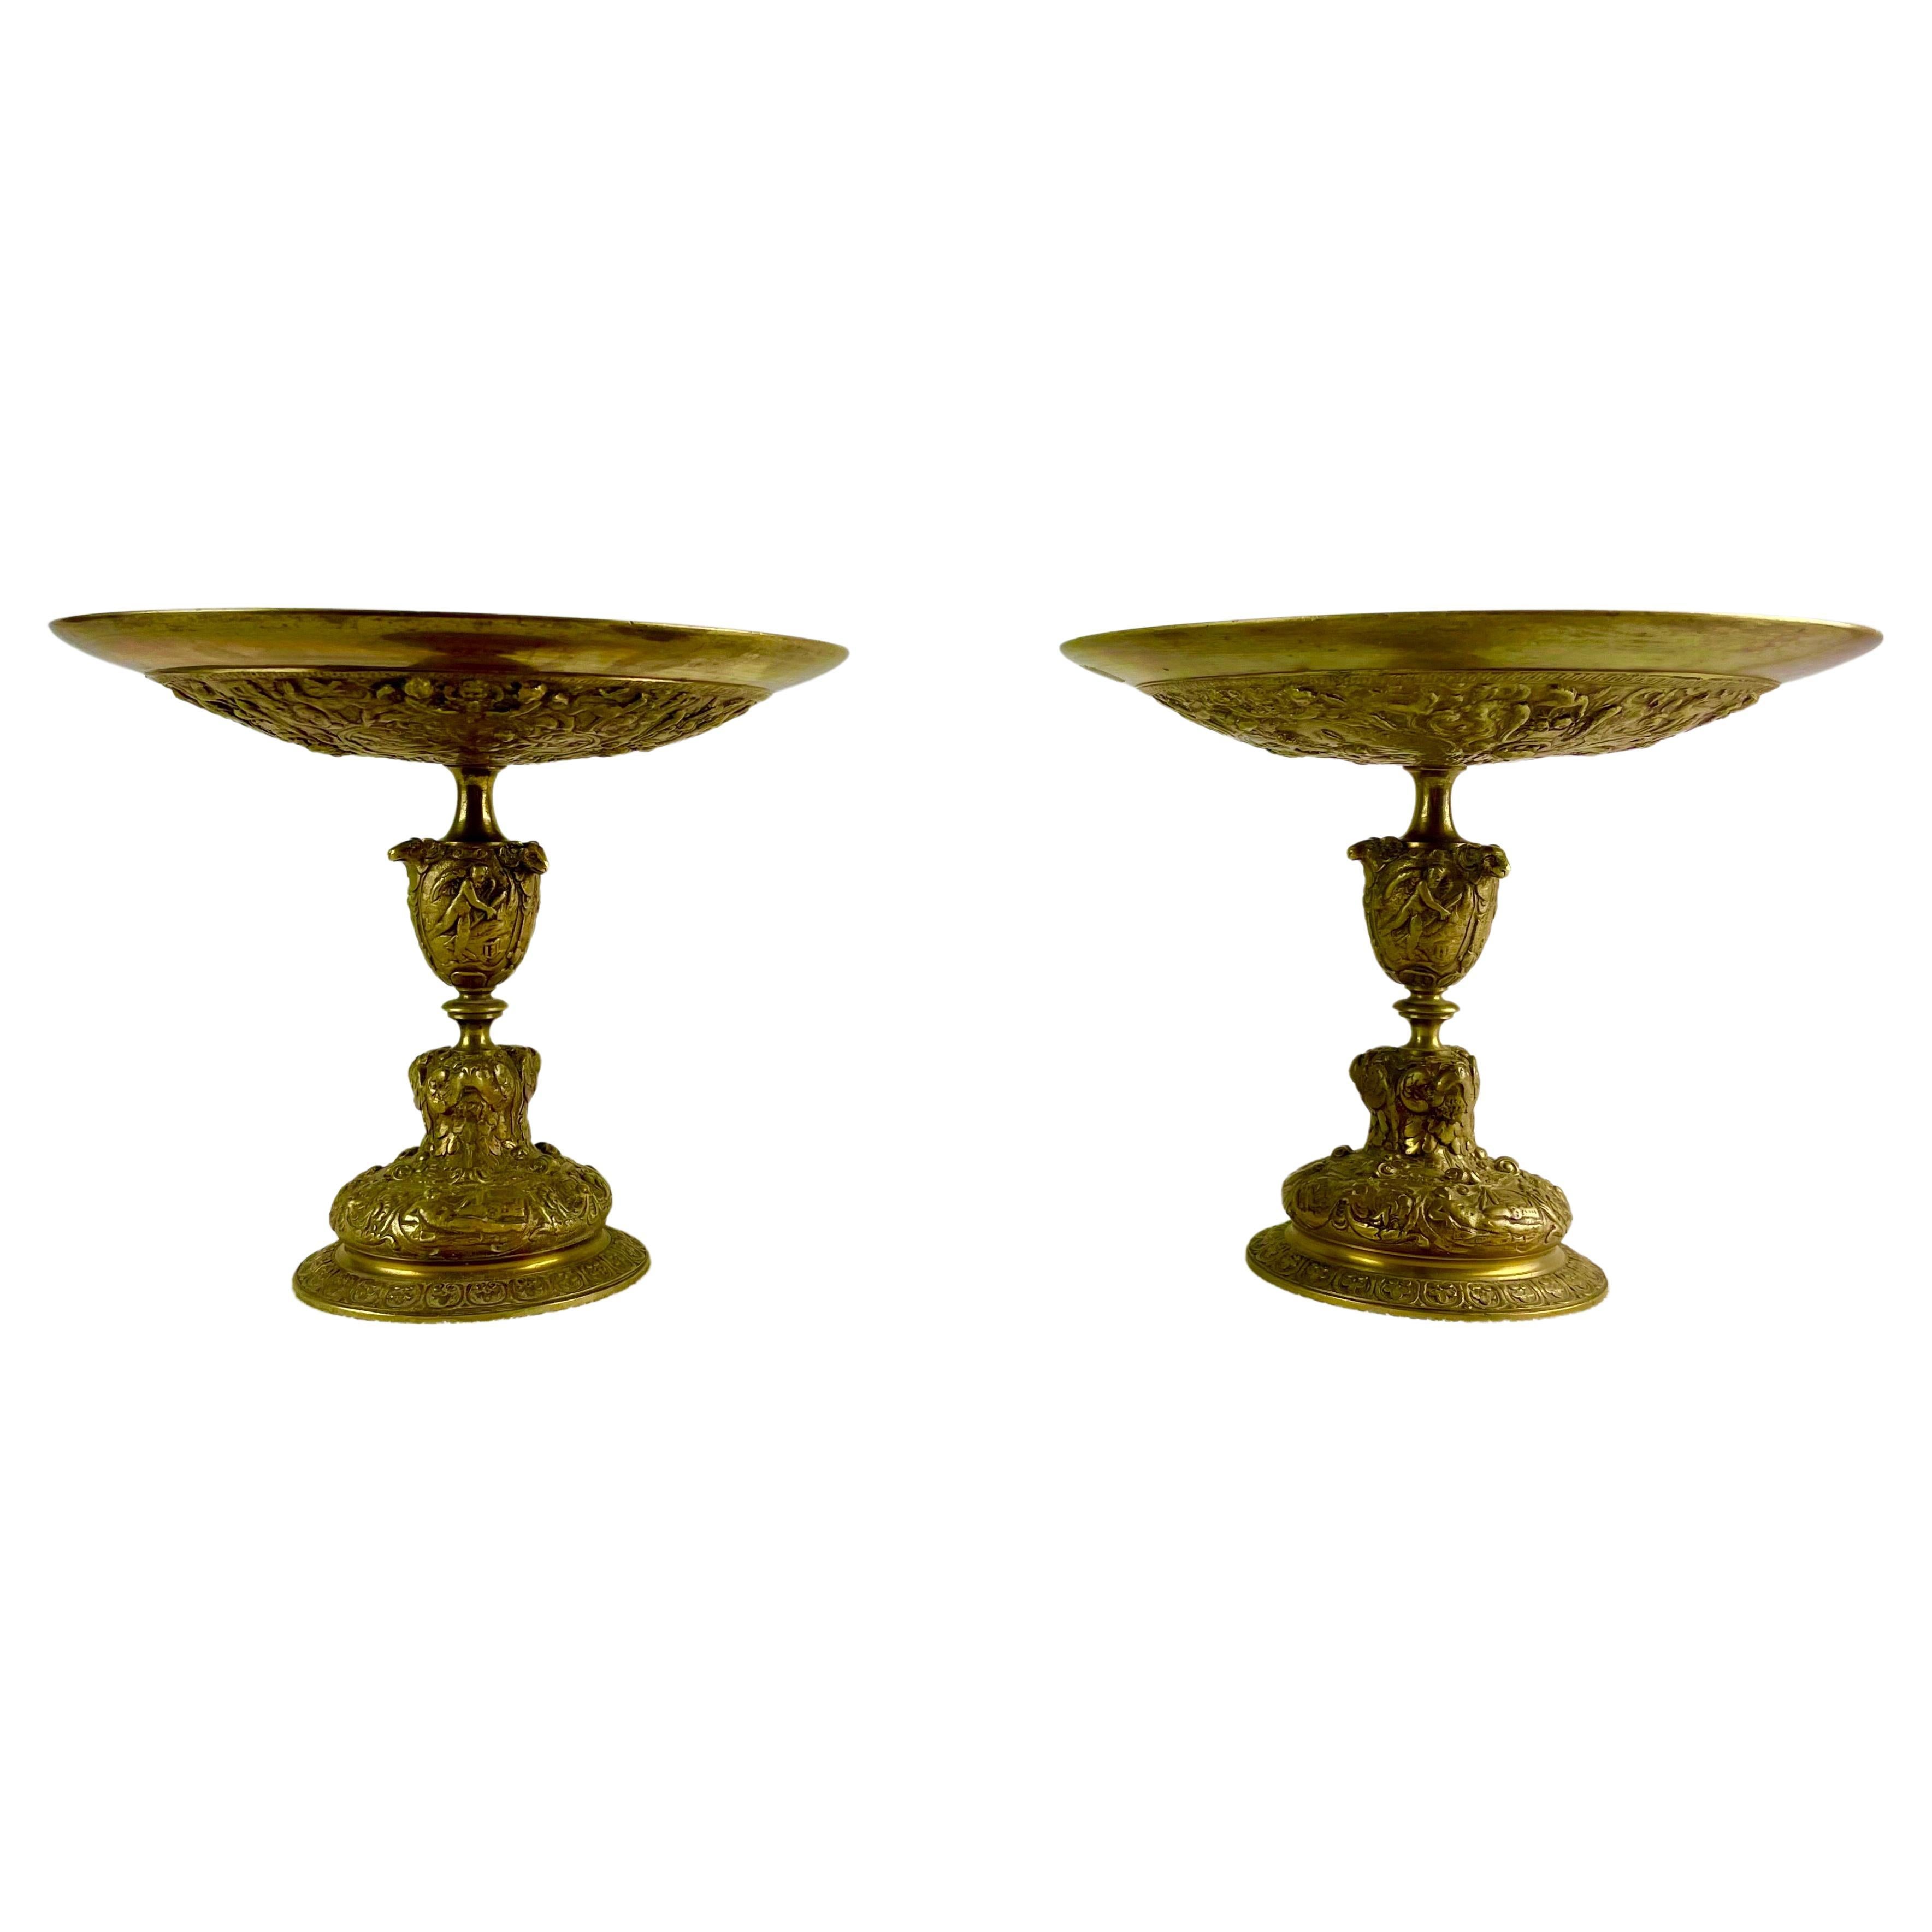 Renaissance Revival Tazza Neo Renaissance Pair of Cups Gilt Bronze Decor Deities of Antiquity 19thC. For Sale